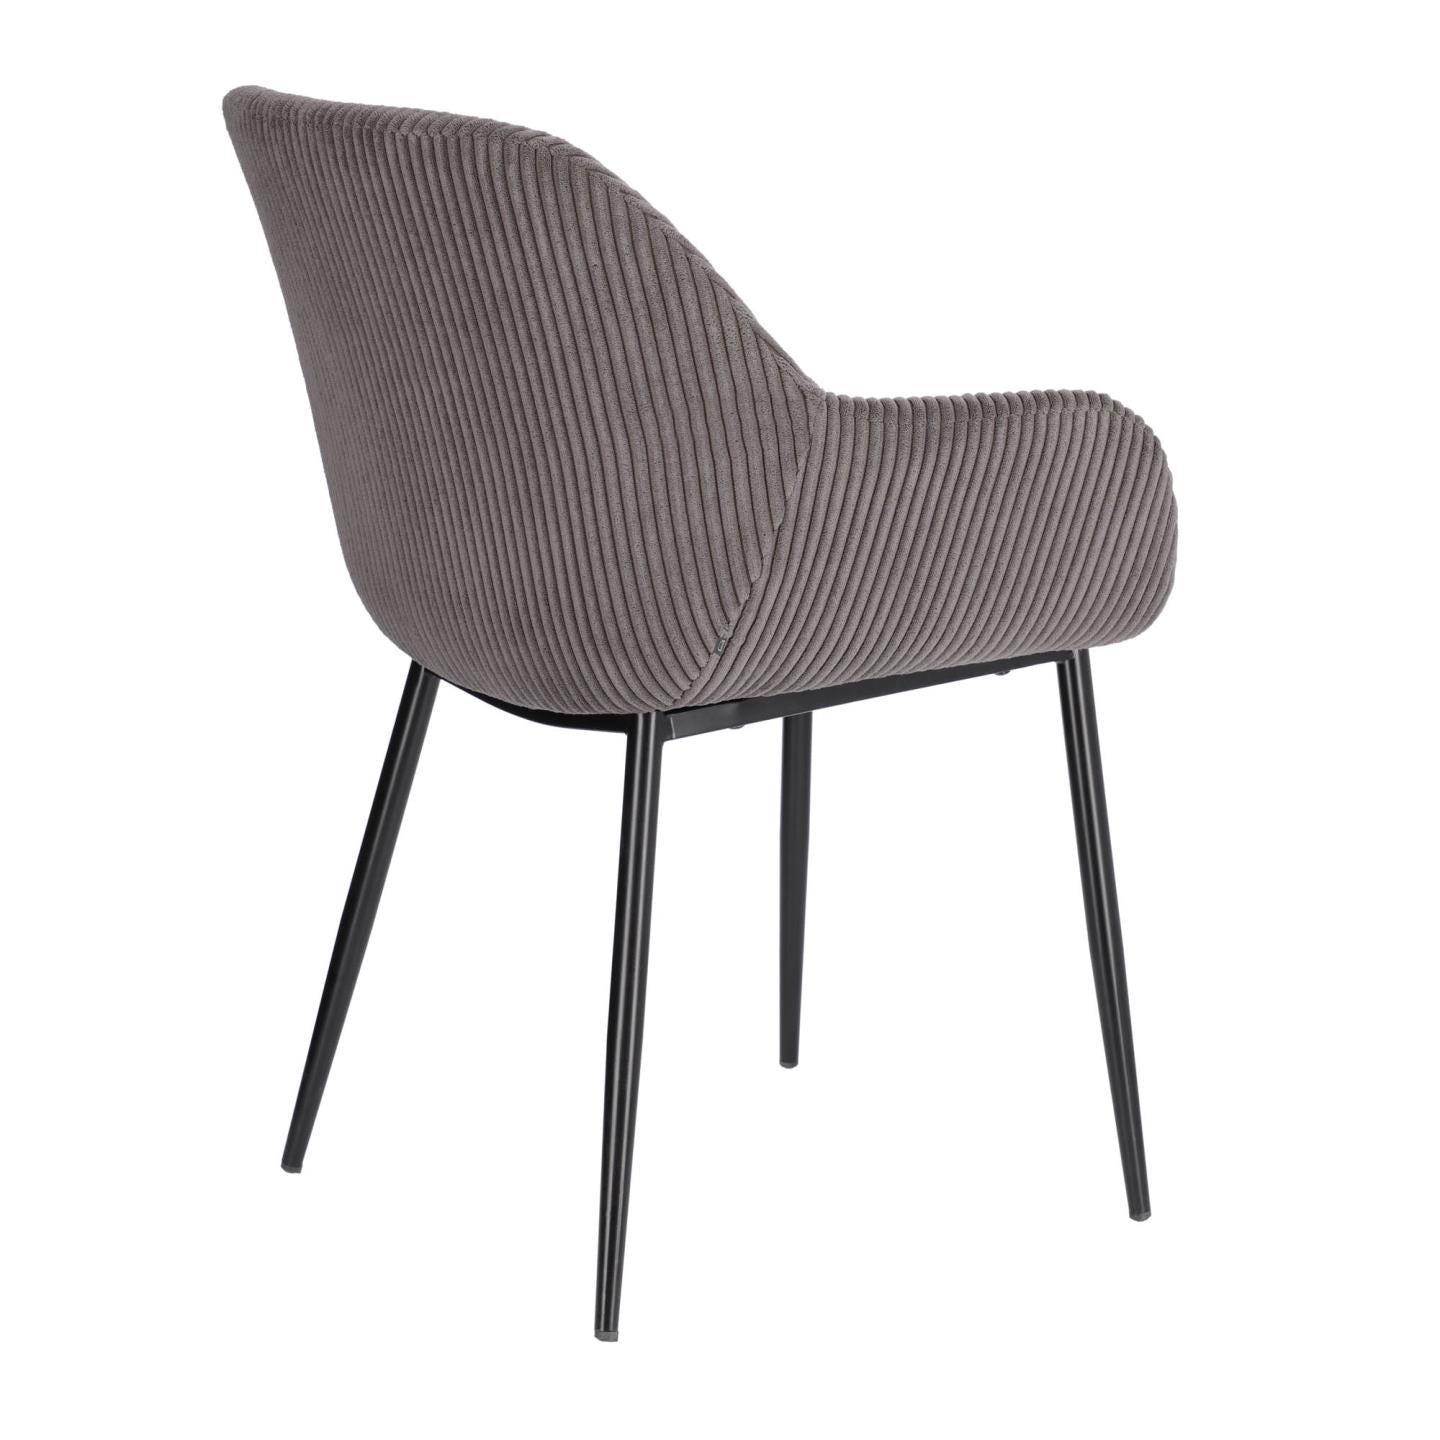 Konna chair in grey wide seam corduroy